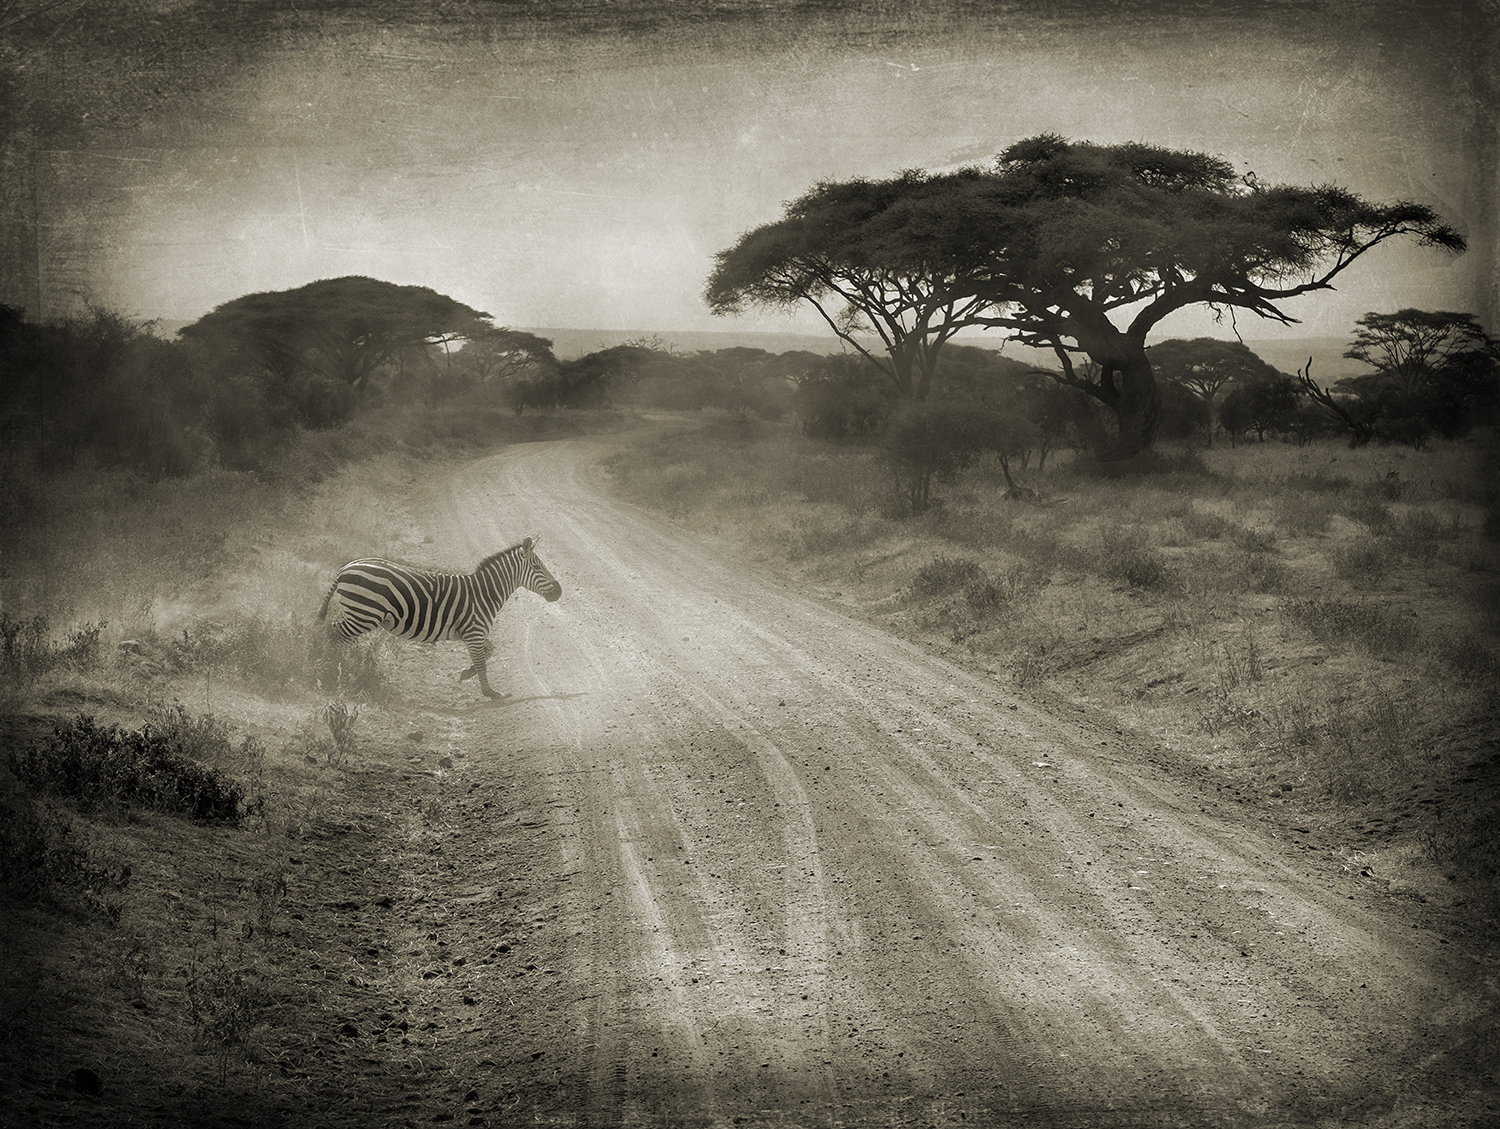 Zebra Crossing Road